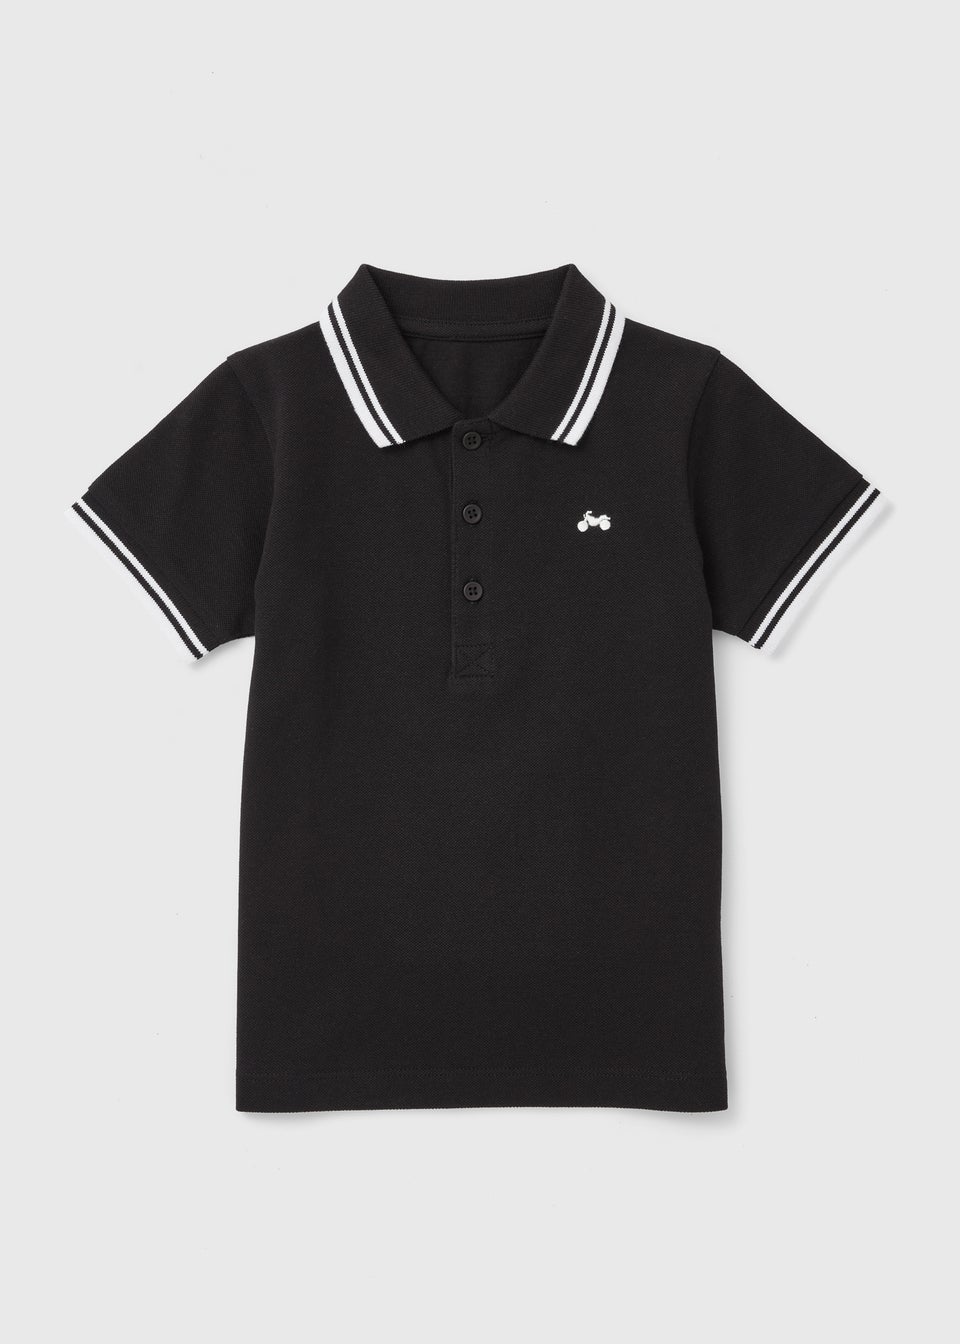 Boys Black Embroidered Polo (1-7yrs)